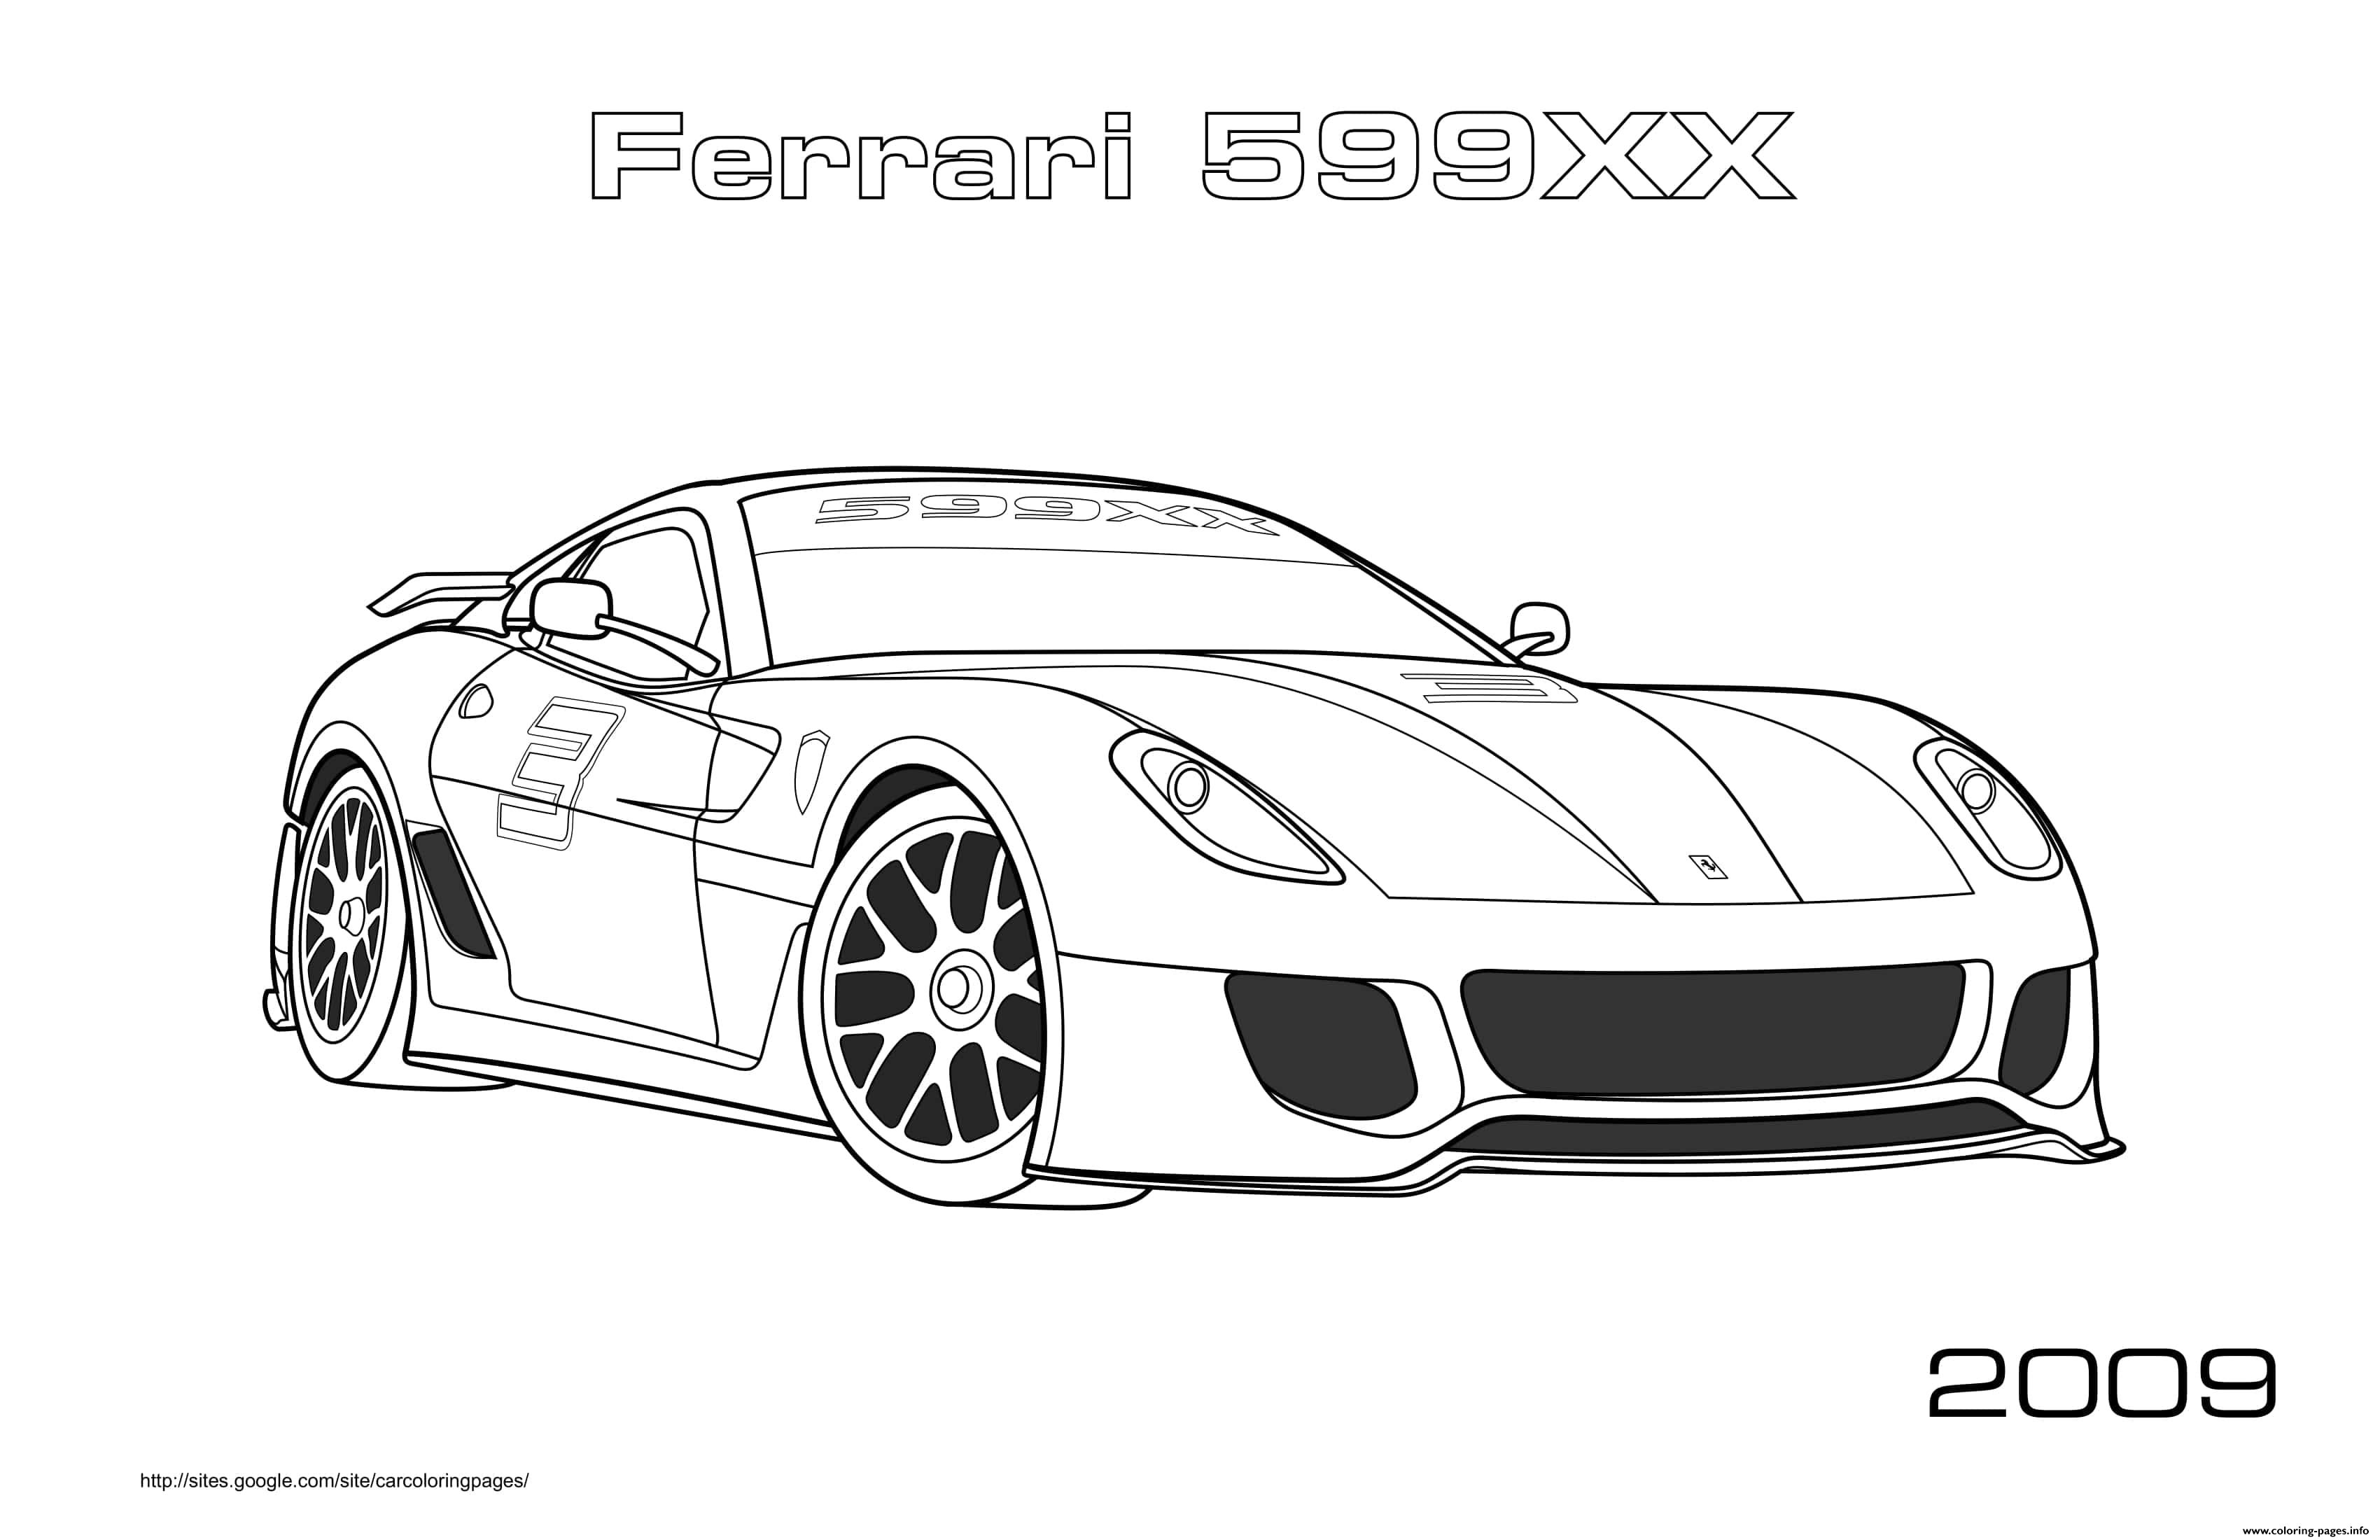 Ferrari 599xx 2009 coloring